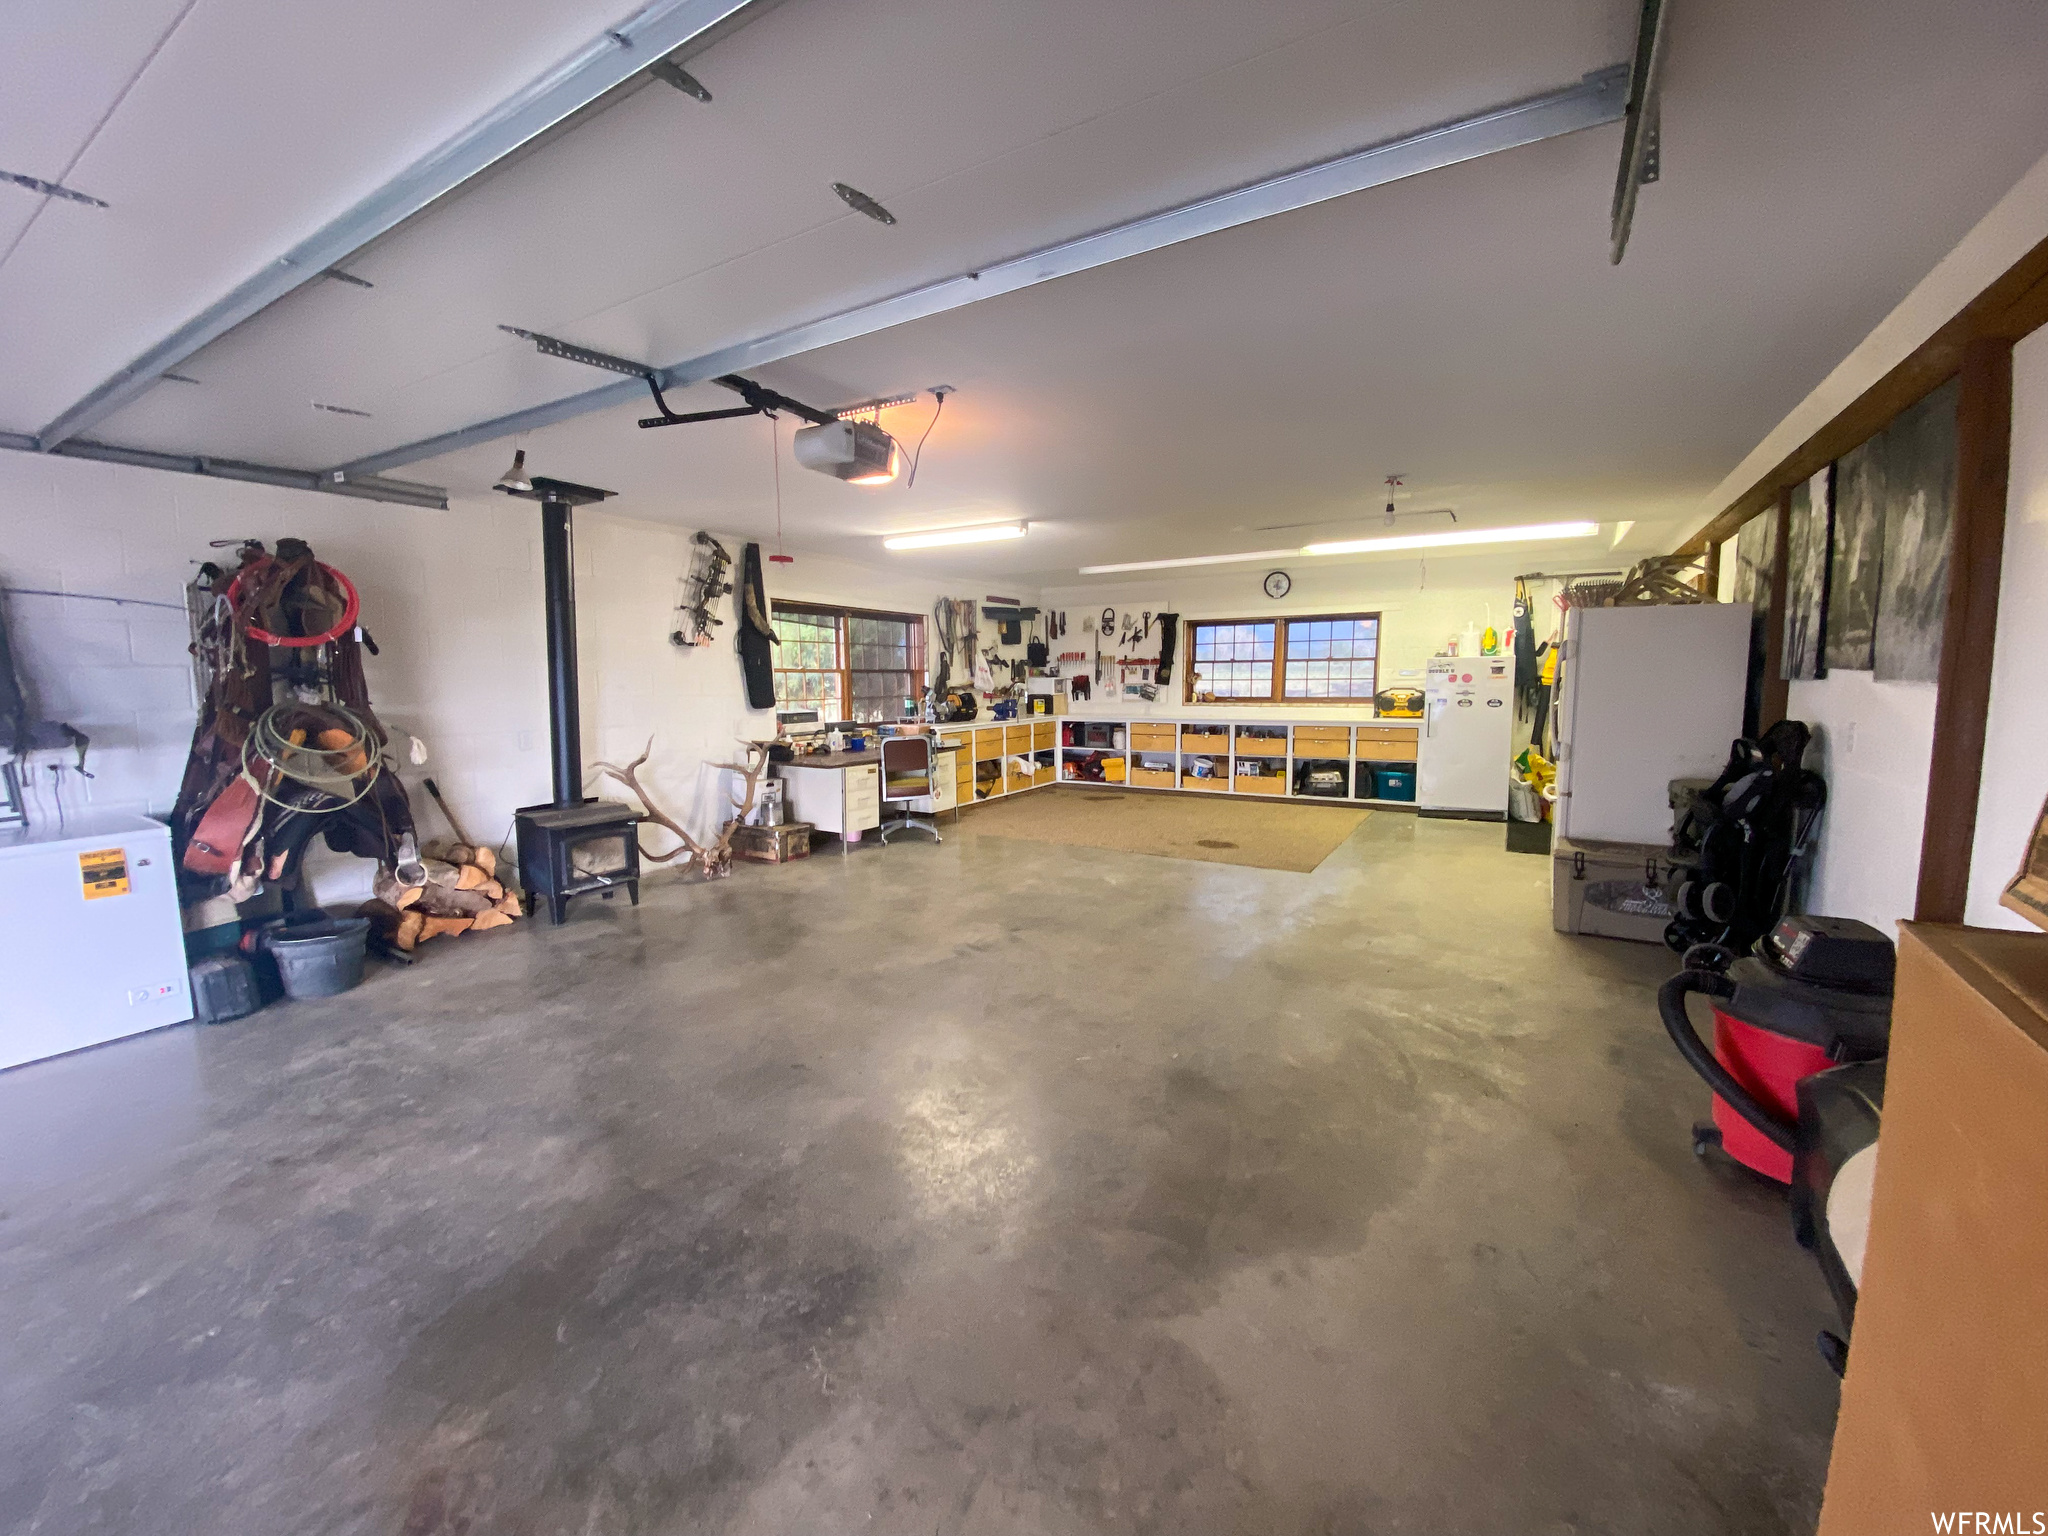 Garage with white refrigerator, a garage door opener, and a workshop area